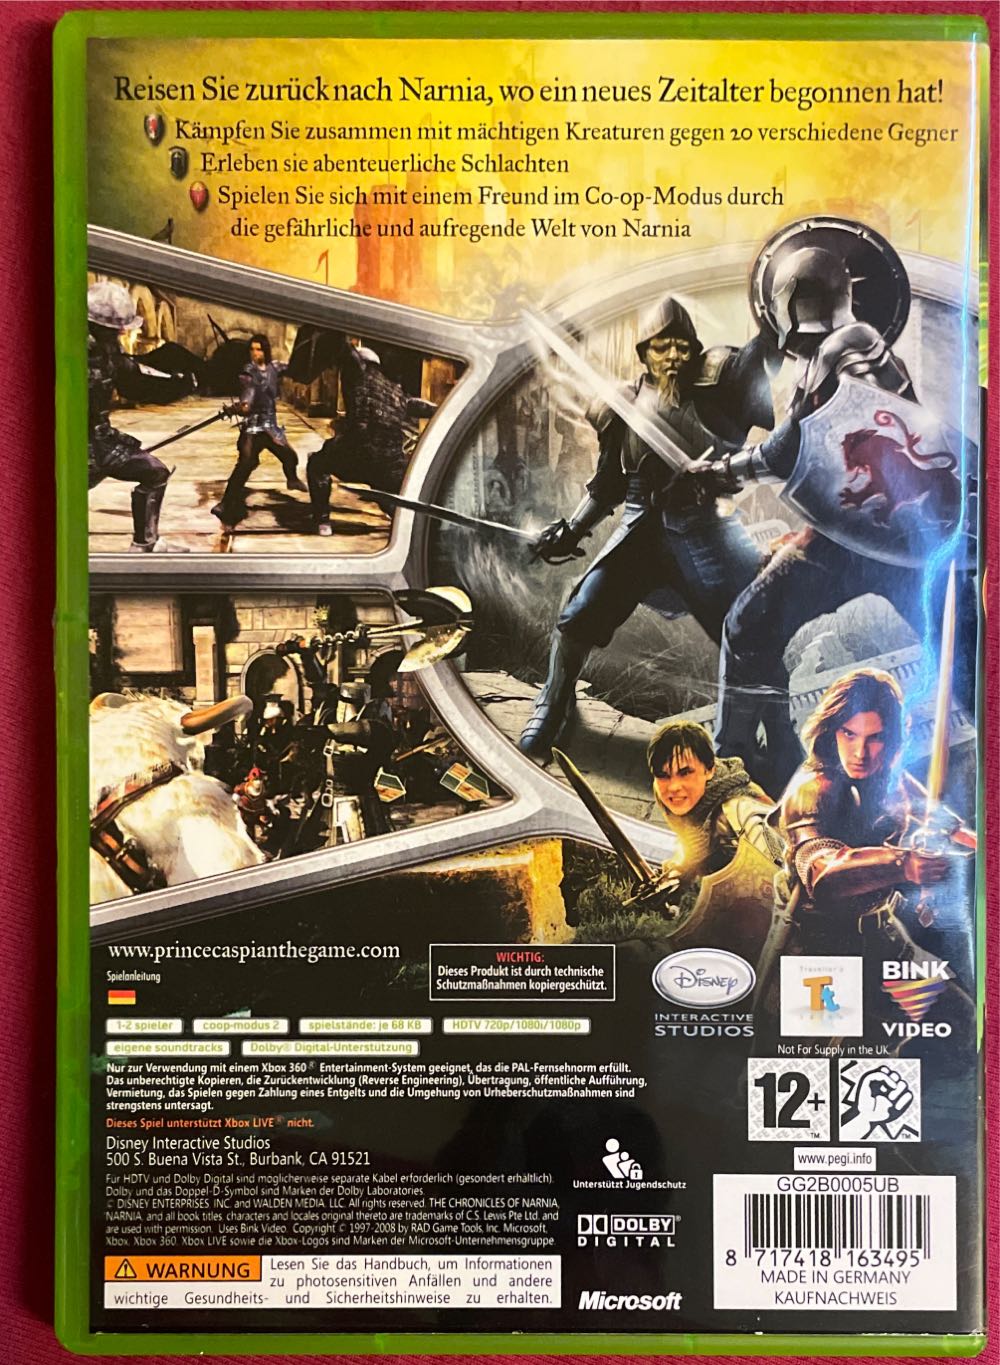 The Chronicles of Narnia: Prince Caspian - Microsoft Xbox 360 (Disney Interactive Studios - 1-2) video game collectible [Barcode 8717418163495] - Main Image 2